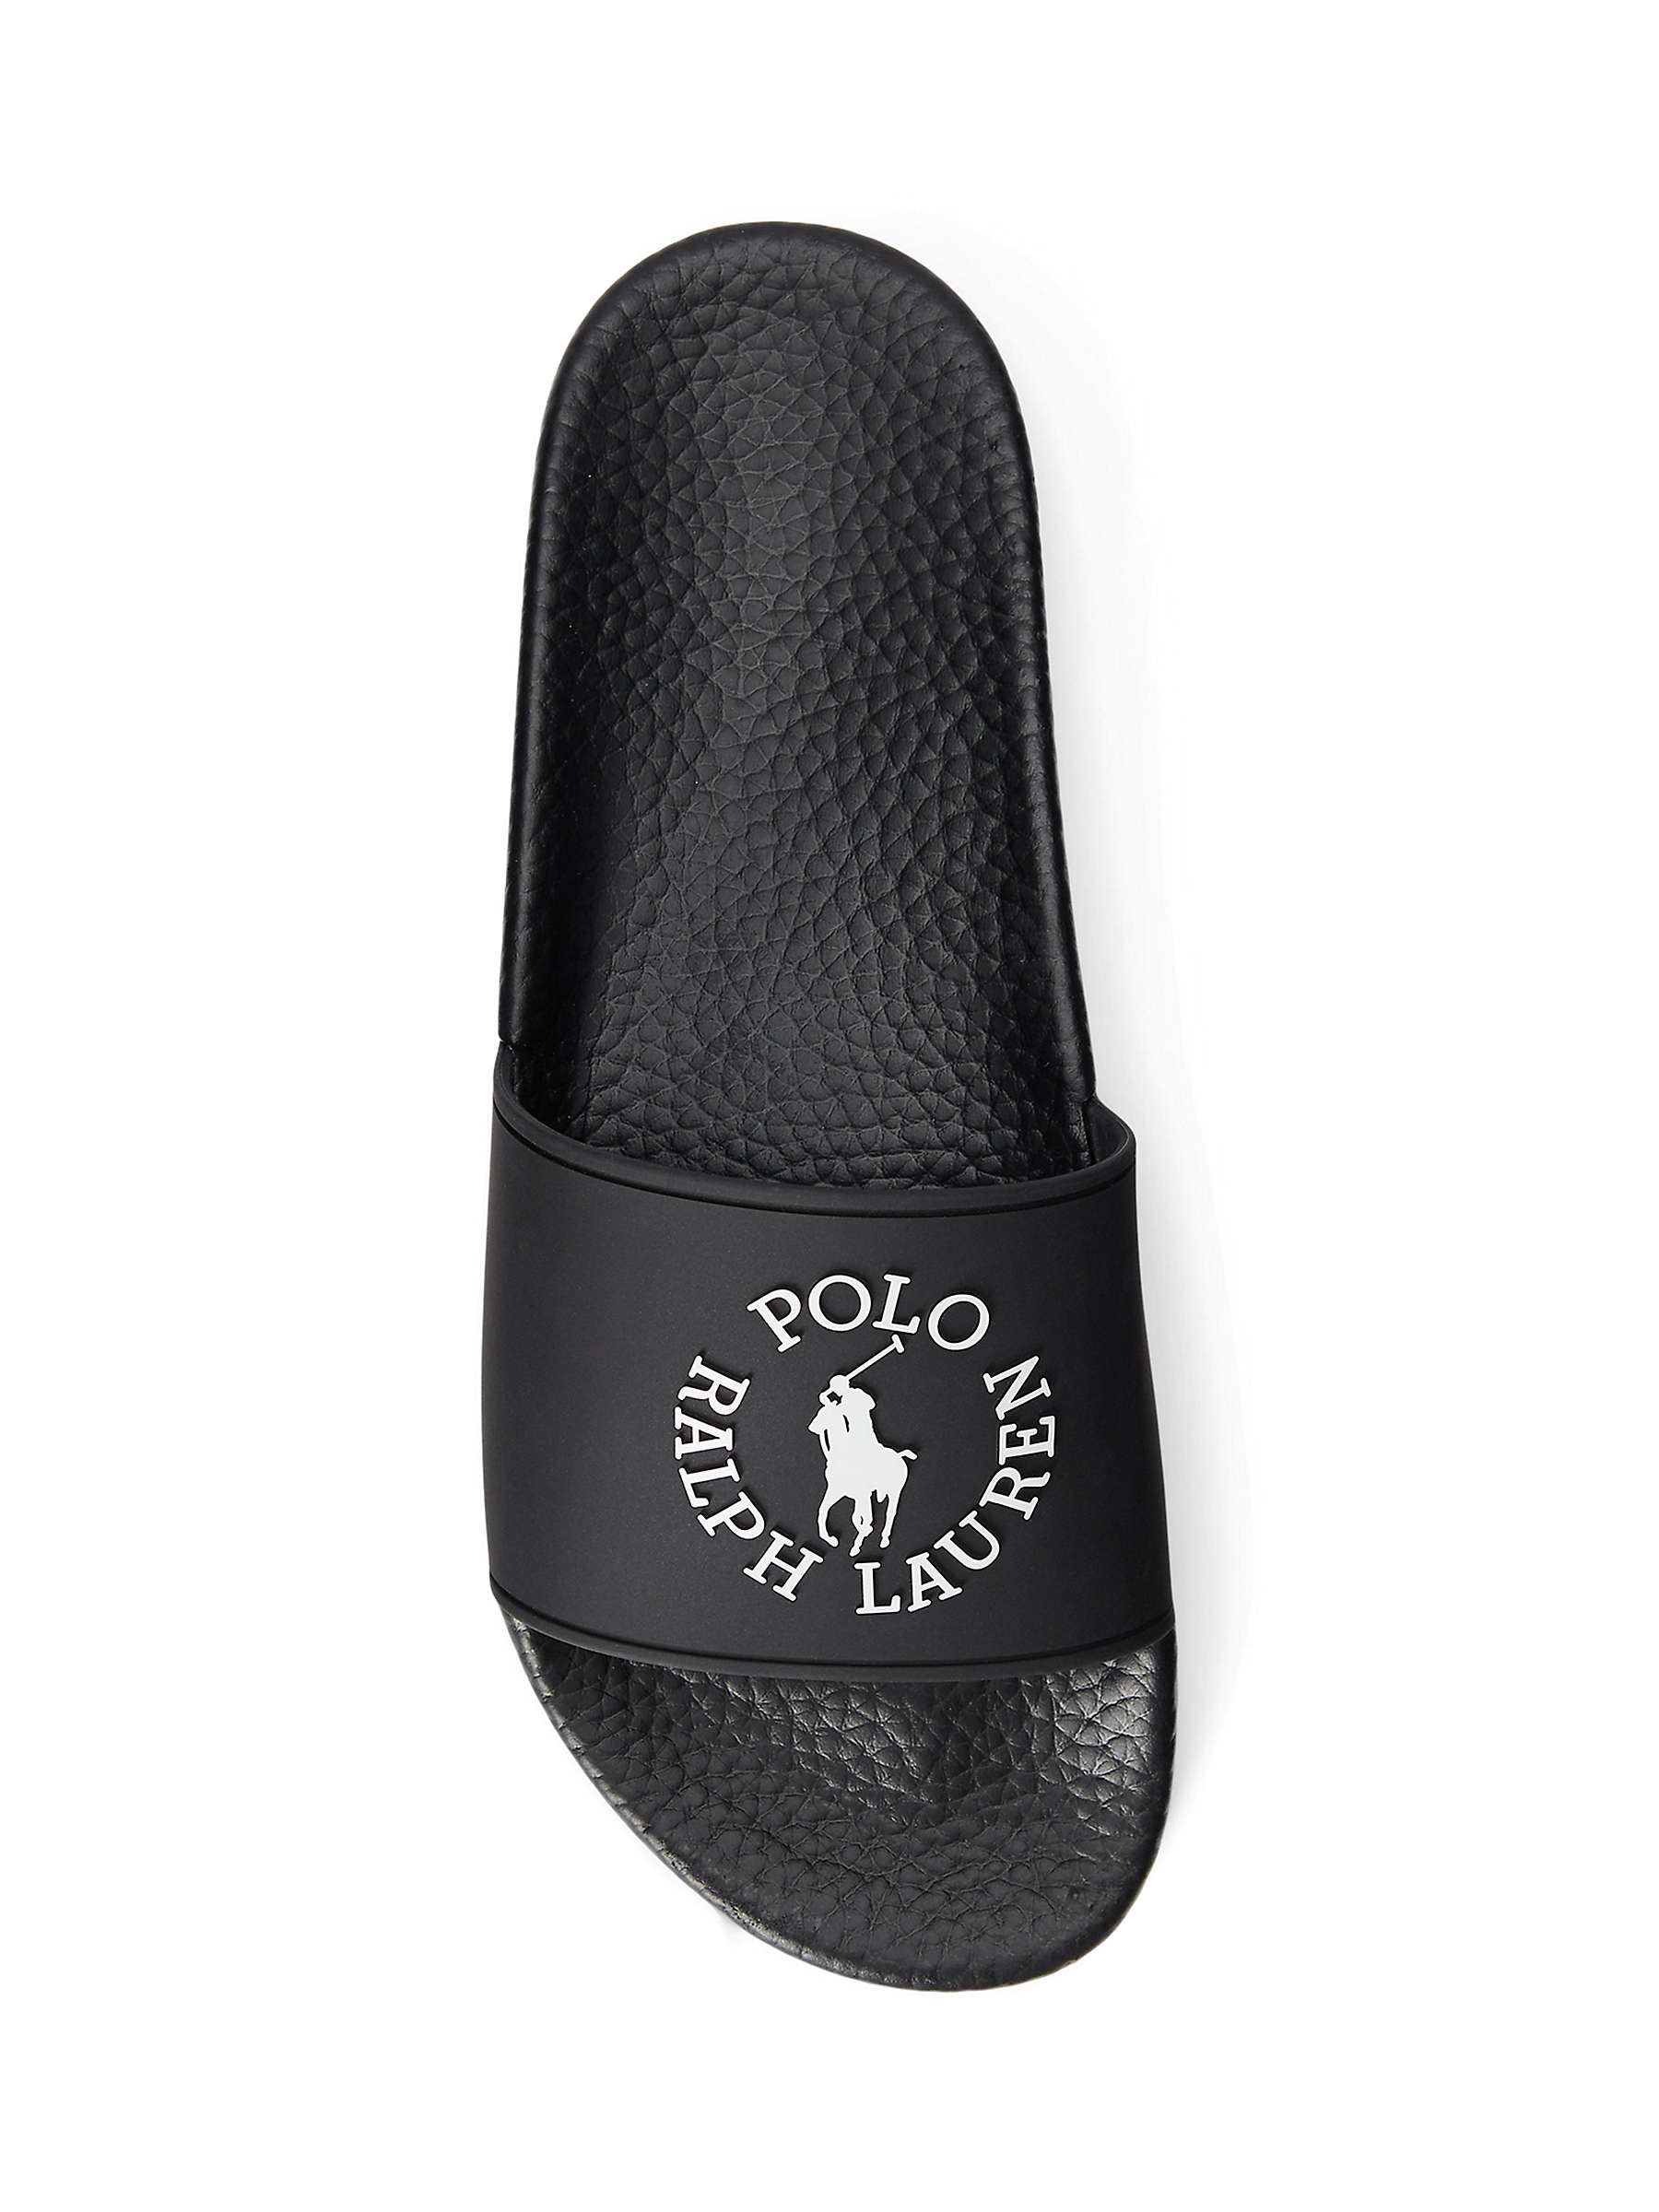 Polo Ralph Lauren Leather Slider Sandals, Black at John Lewis & Partners